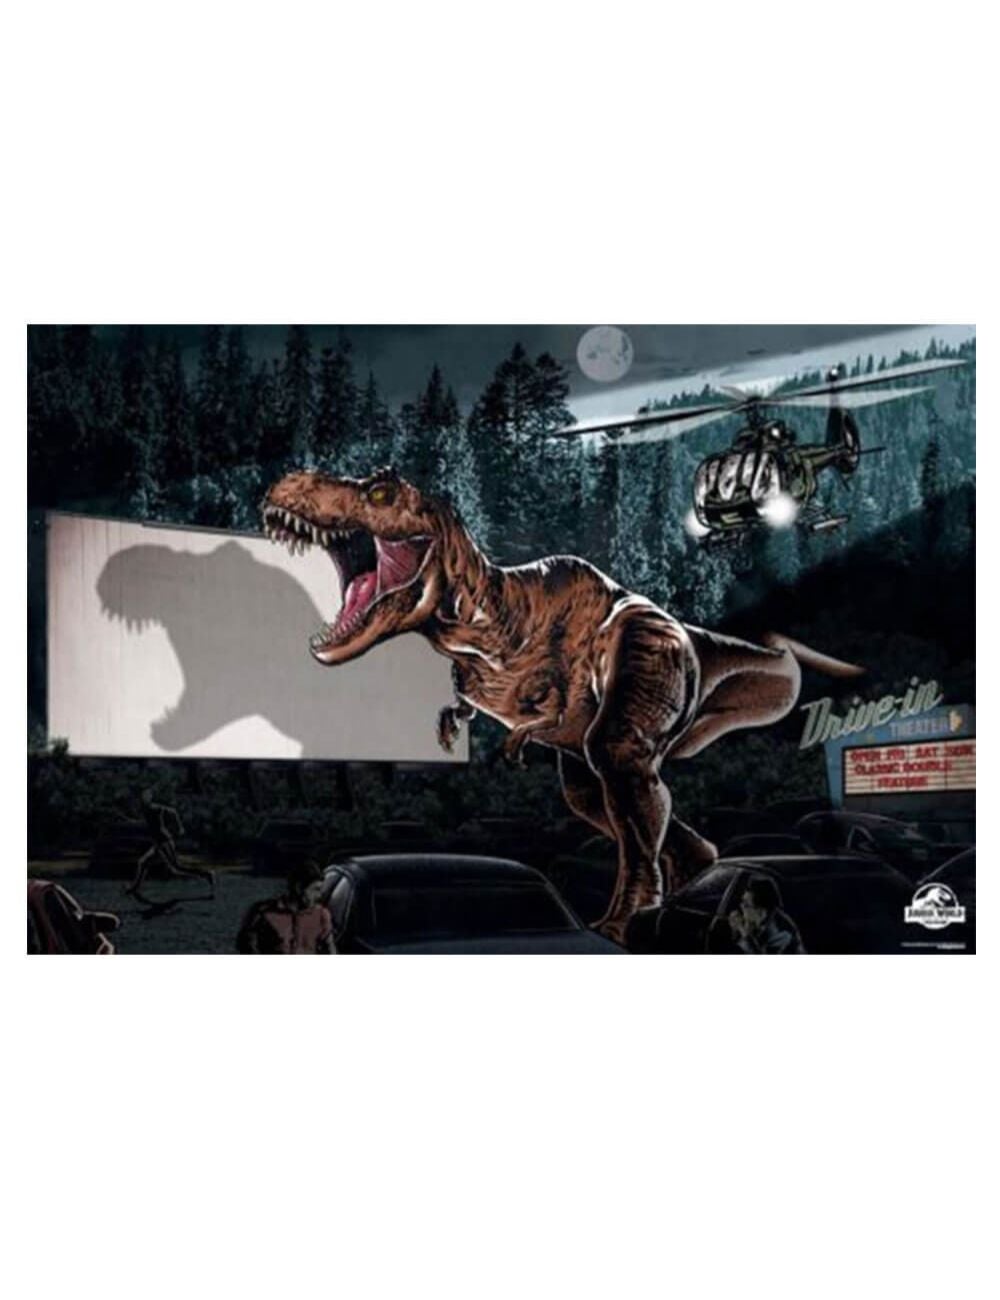 Jurassic World, Fallen Kingdom, T-Rex, Dinosaur Poster